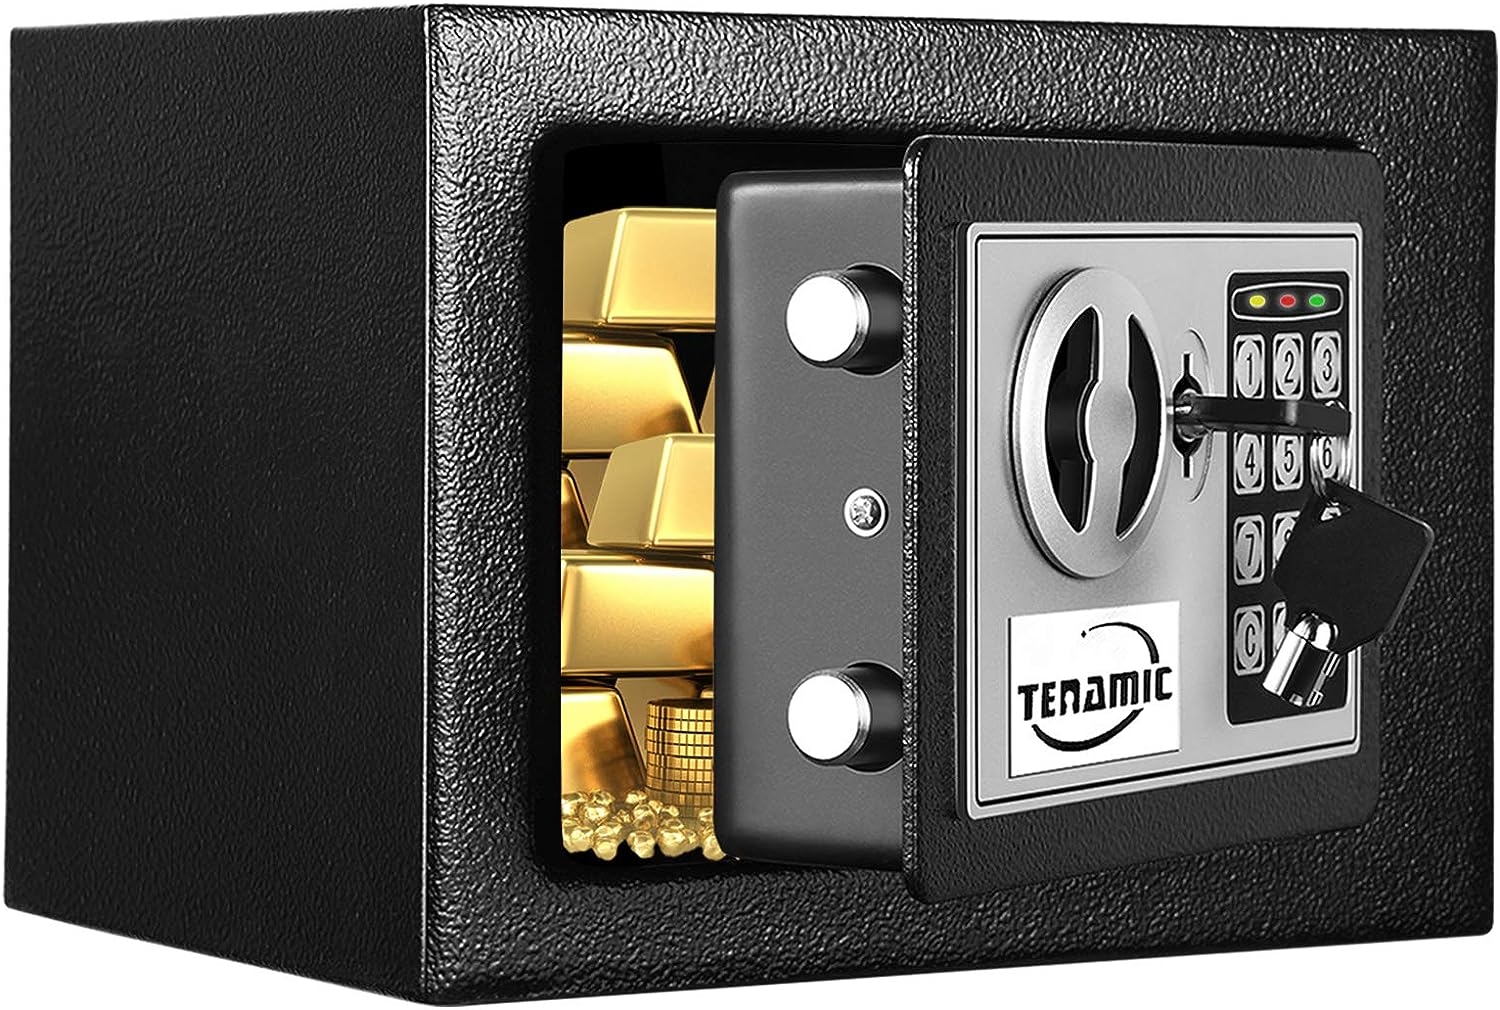 TENAMIC Electronic Safe Box 0.23 Cubic Feet | DeviceDaily.com